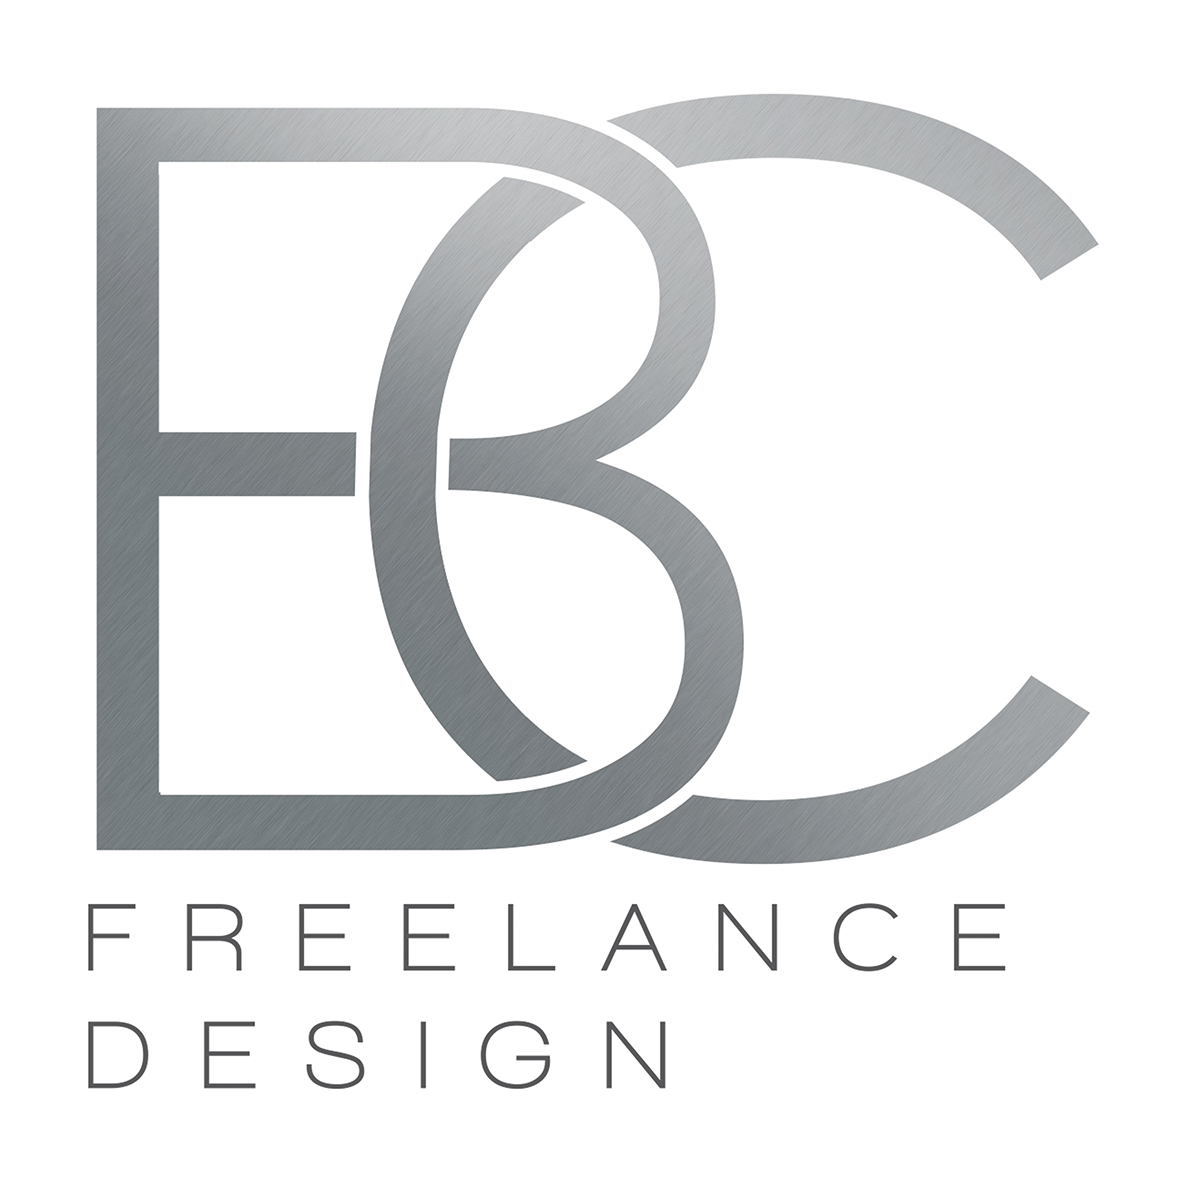 BC freelance design - Casino Accommodation